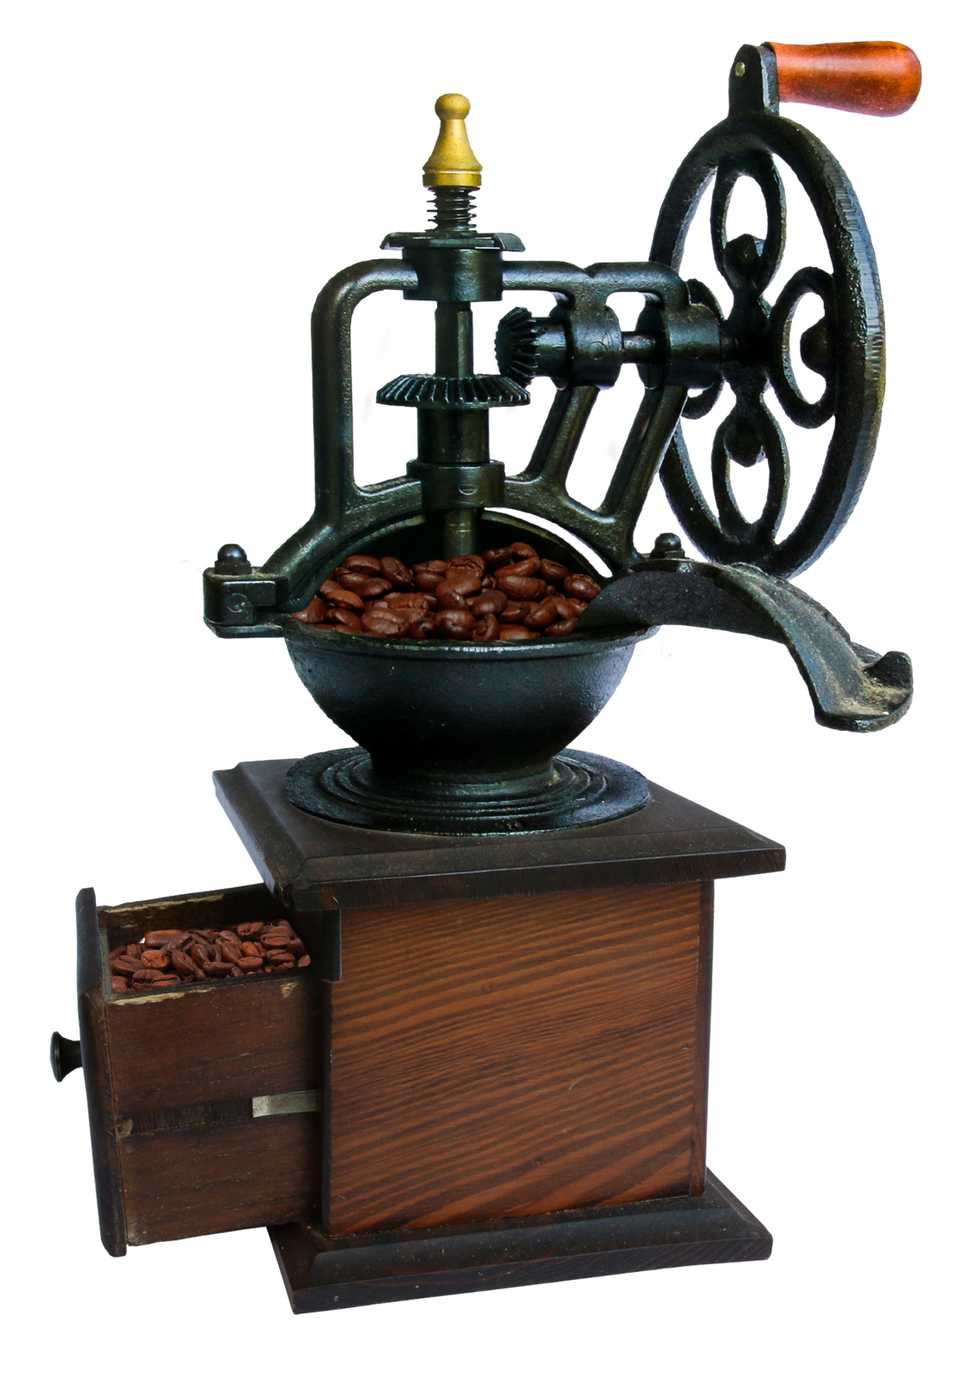 Old-fashioned hand grinder